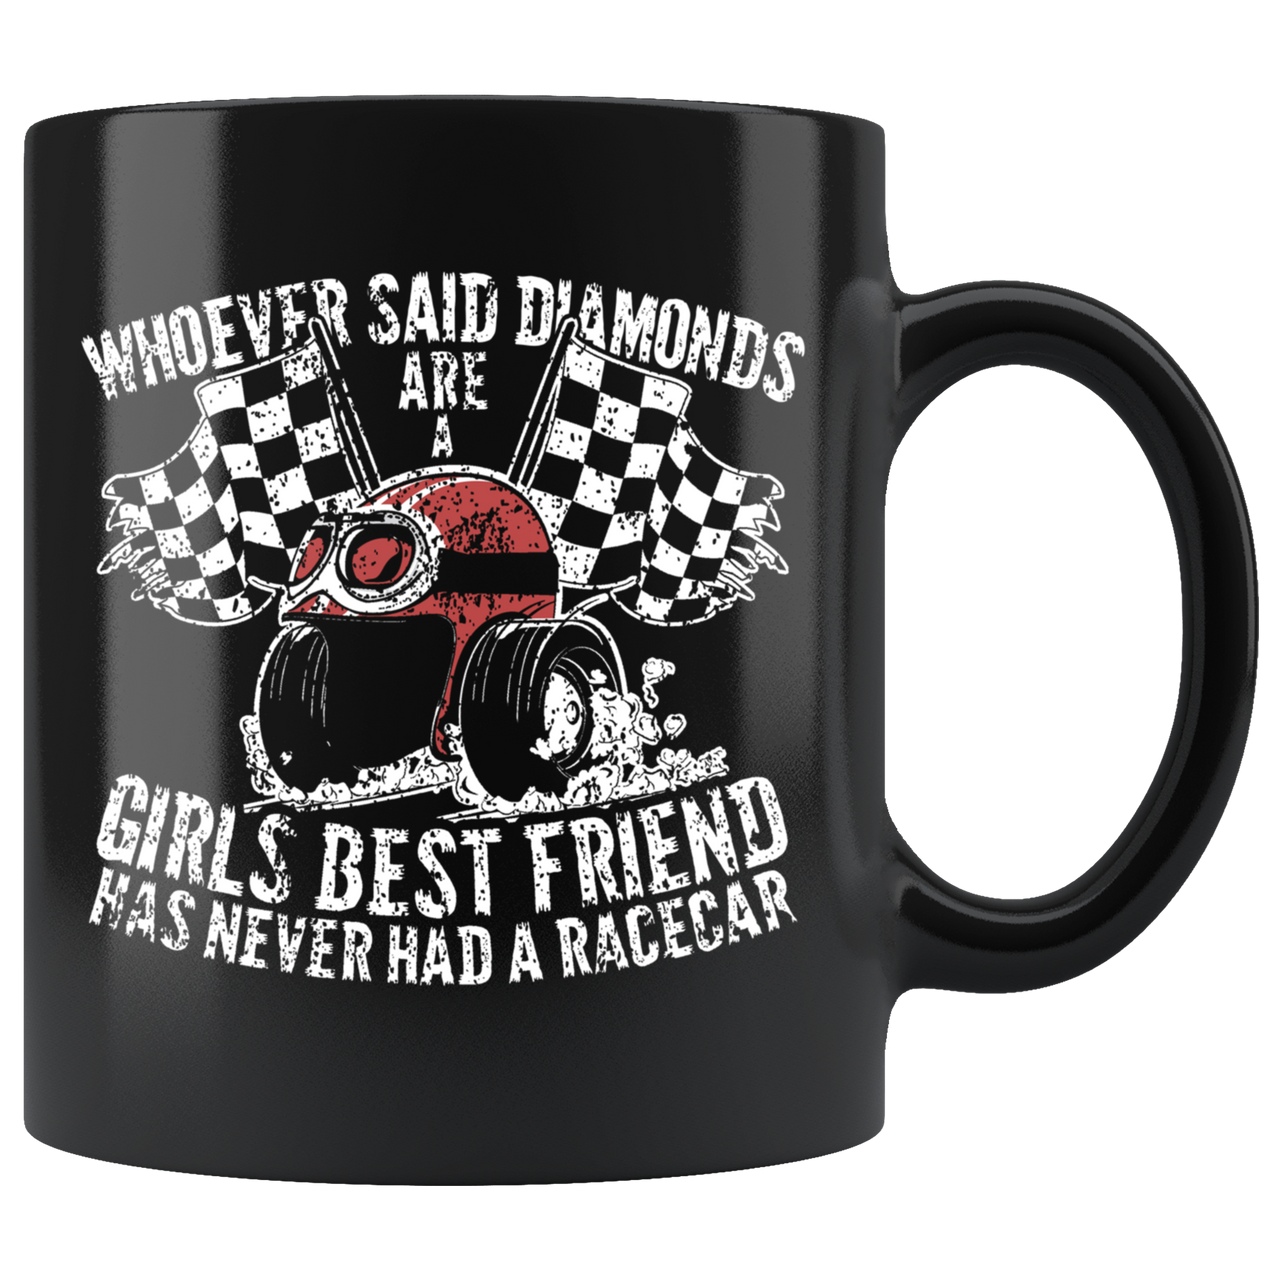 Whoever Said Diamonds Are Girls Best friend Has Never Had A Race Car Mug!